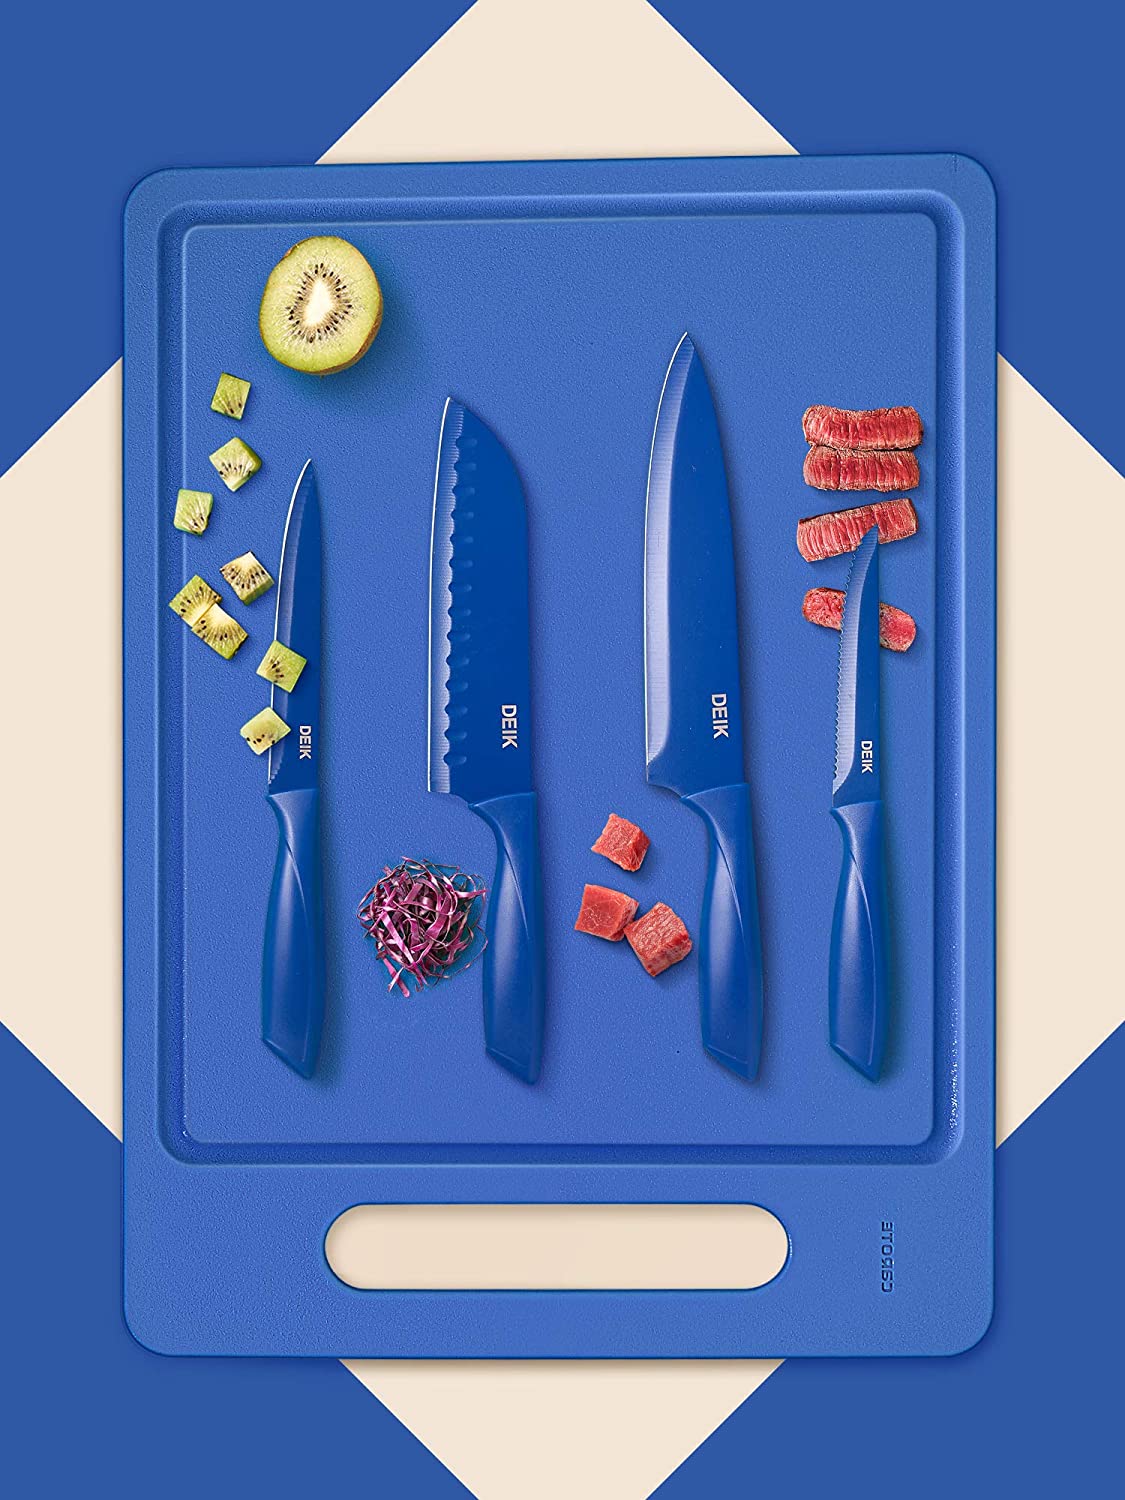 DEIK Knife Set High Carbon Stainless Steel Kitchen Knife Set 16